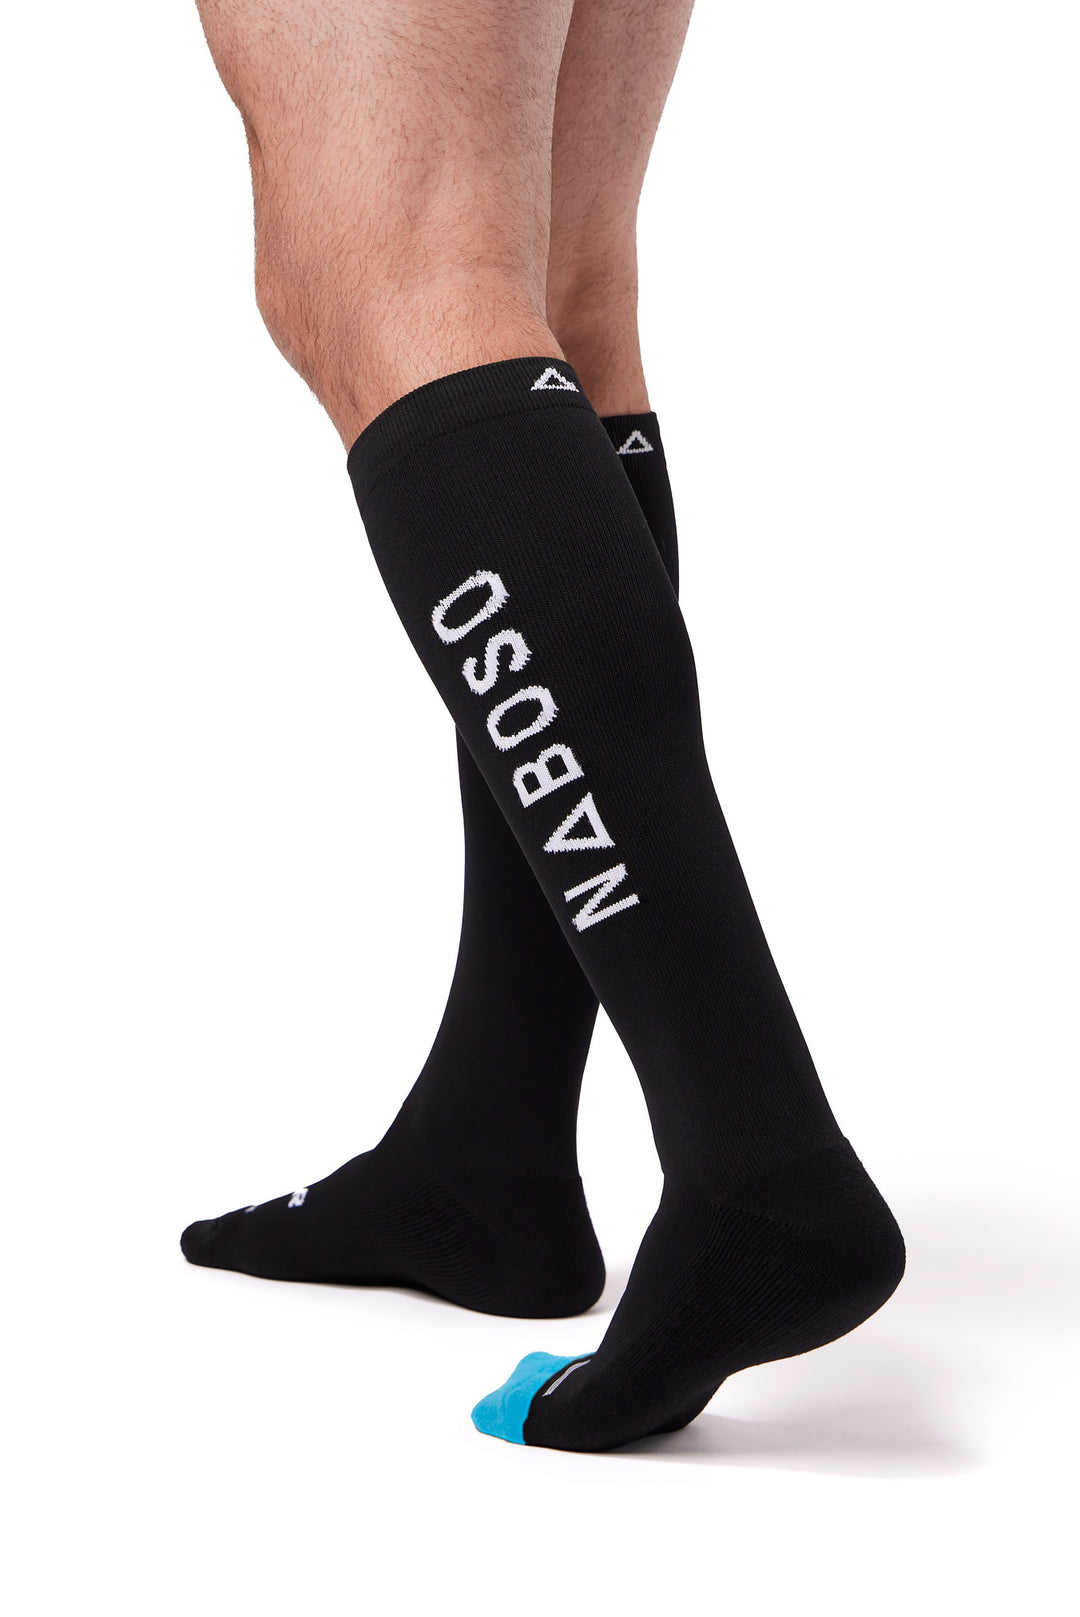 Naboso® - Knee High Recovery Socks - Unisex